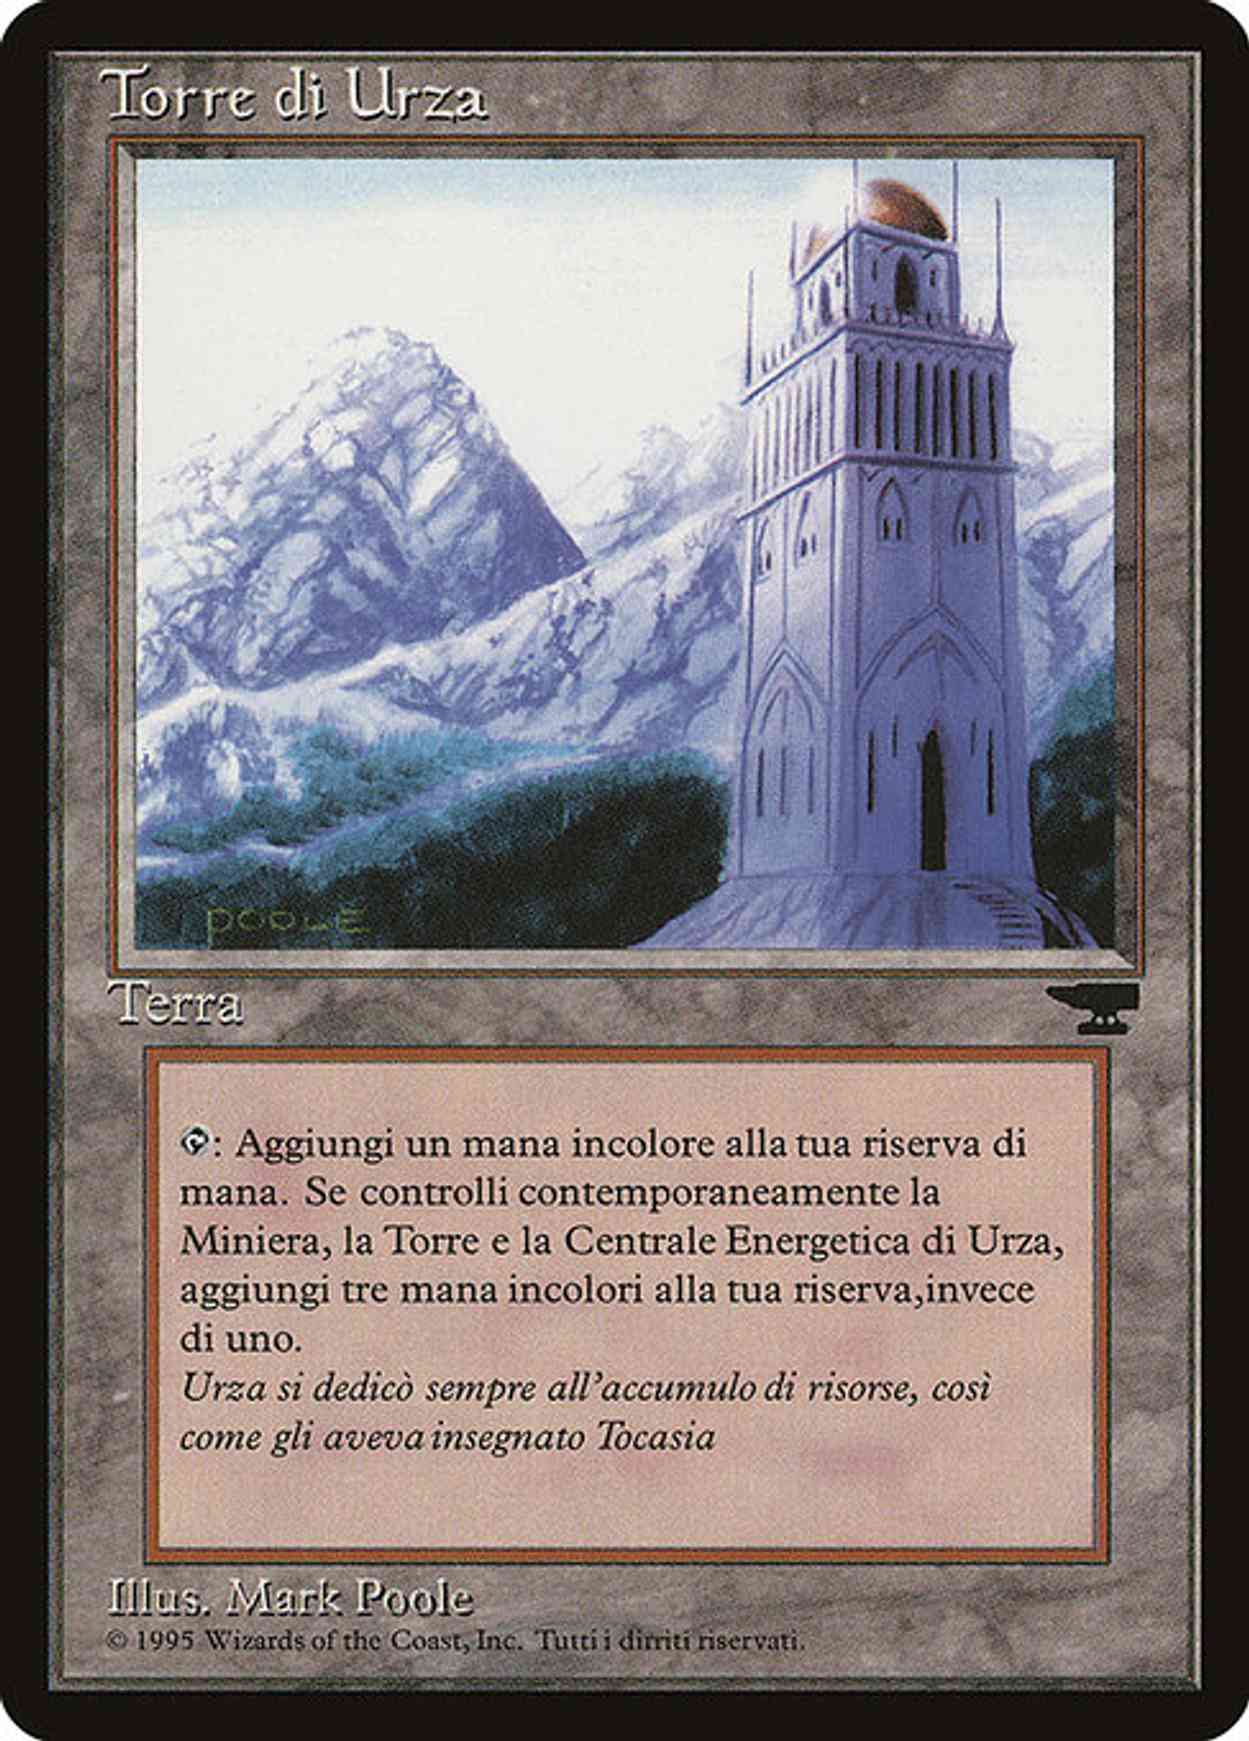 Urza's Tower (Mountains) (Italian) - "Torre di Urza" magic card front